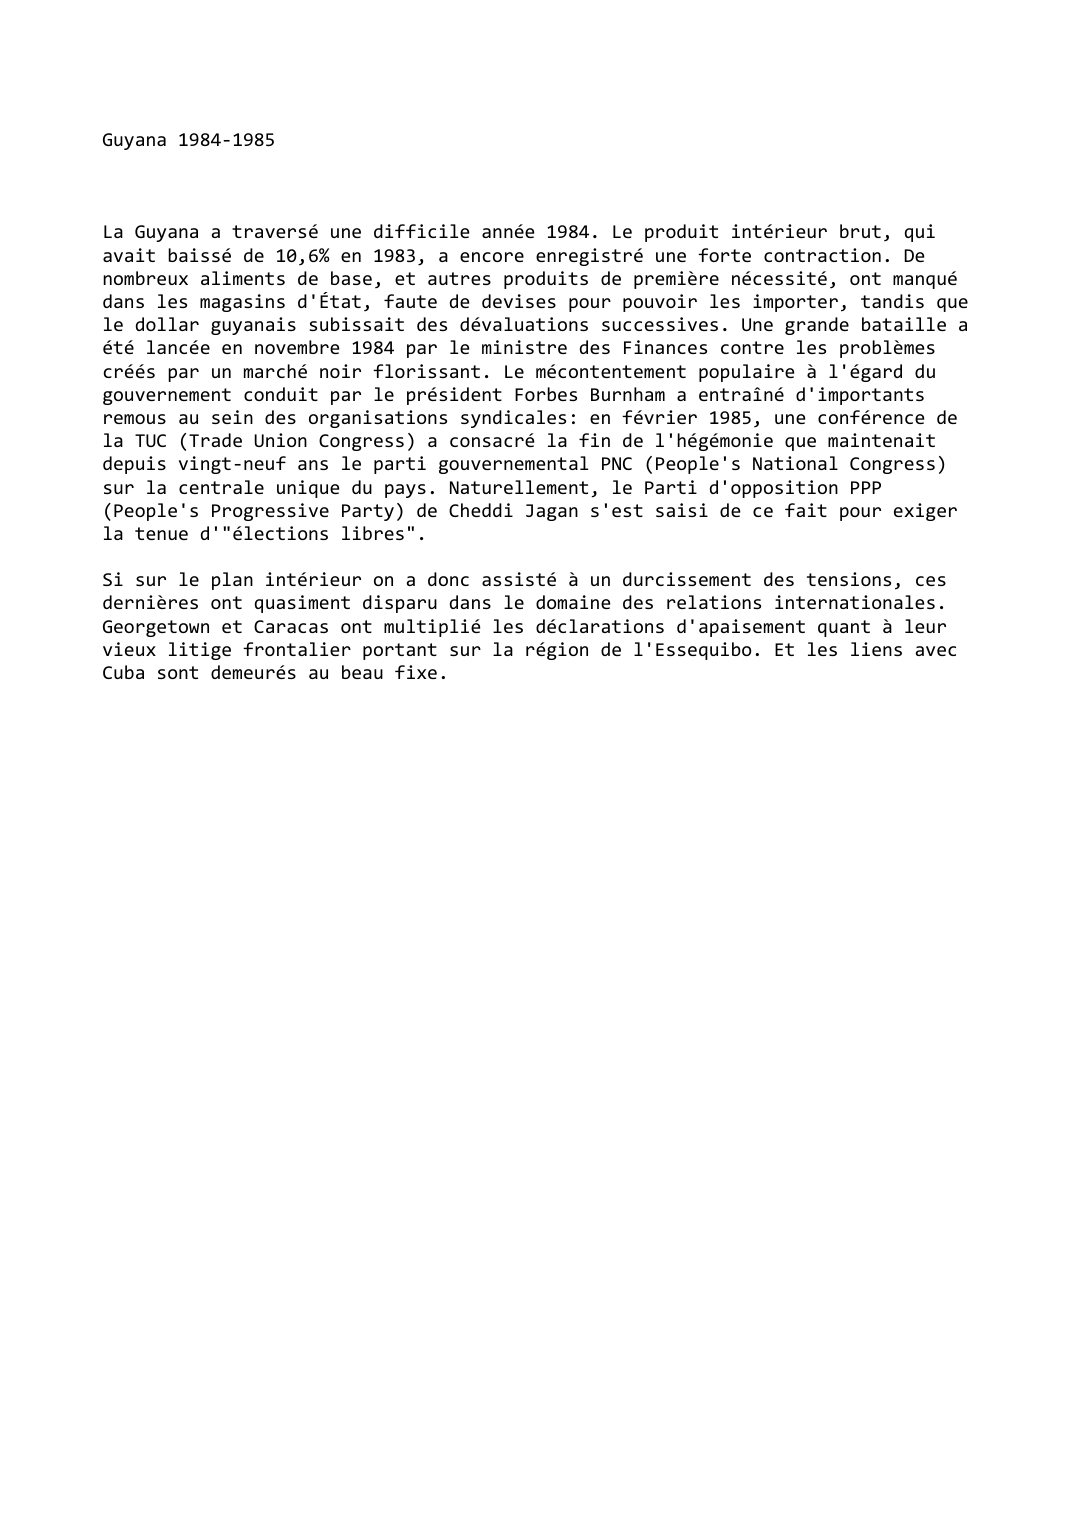 Prévisualisation du document Guyana (1984-1985)